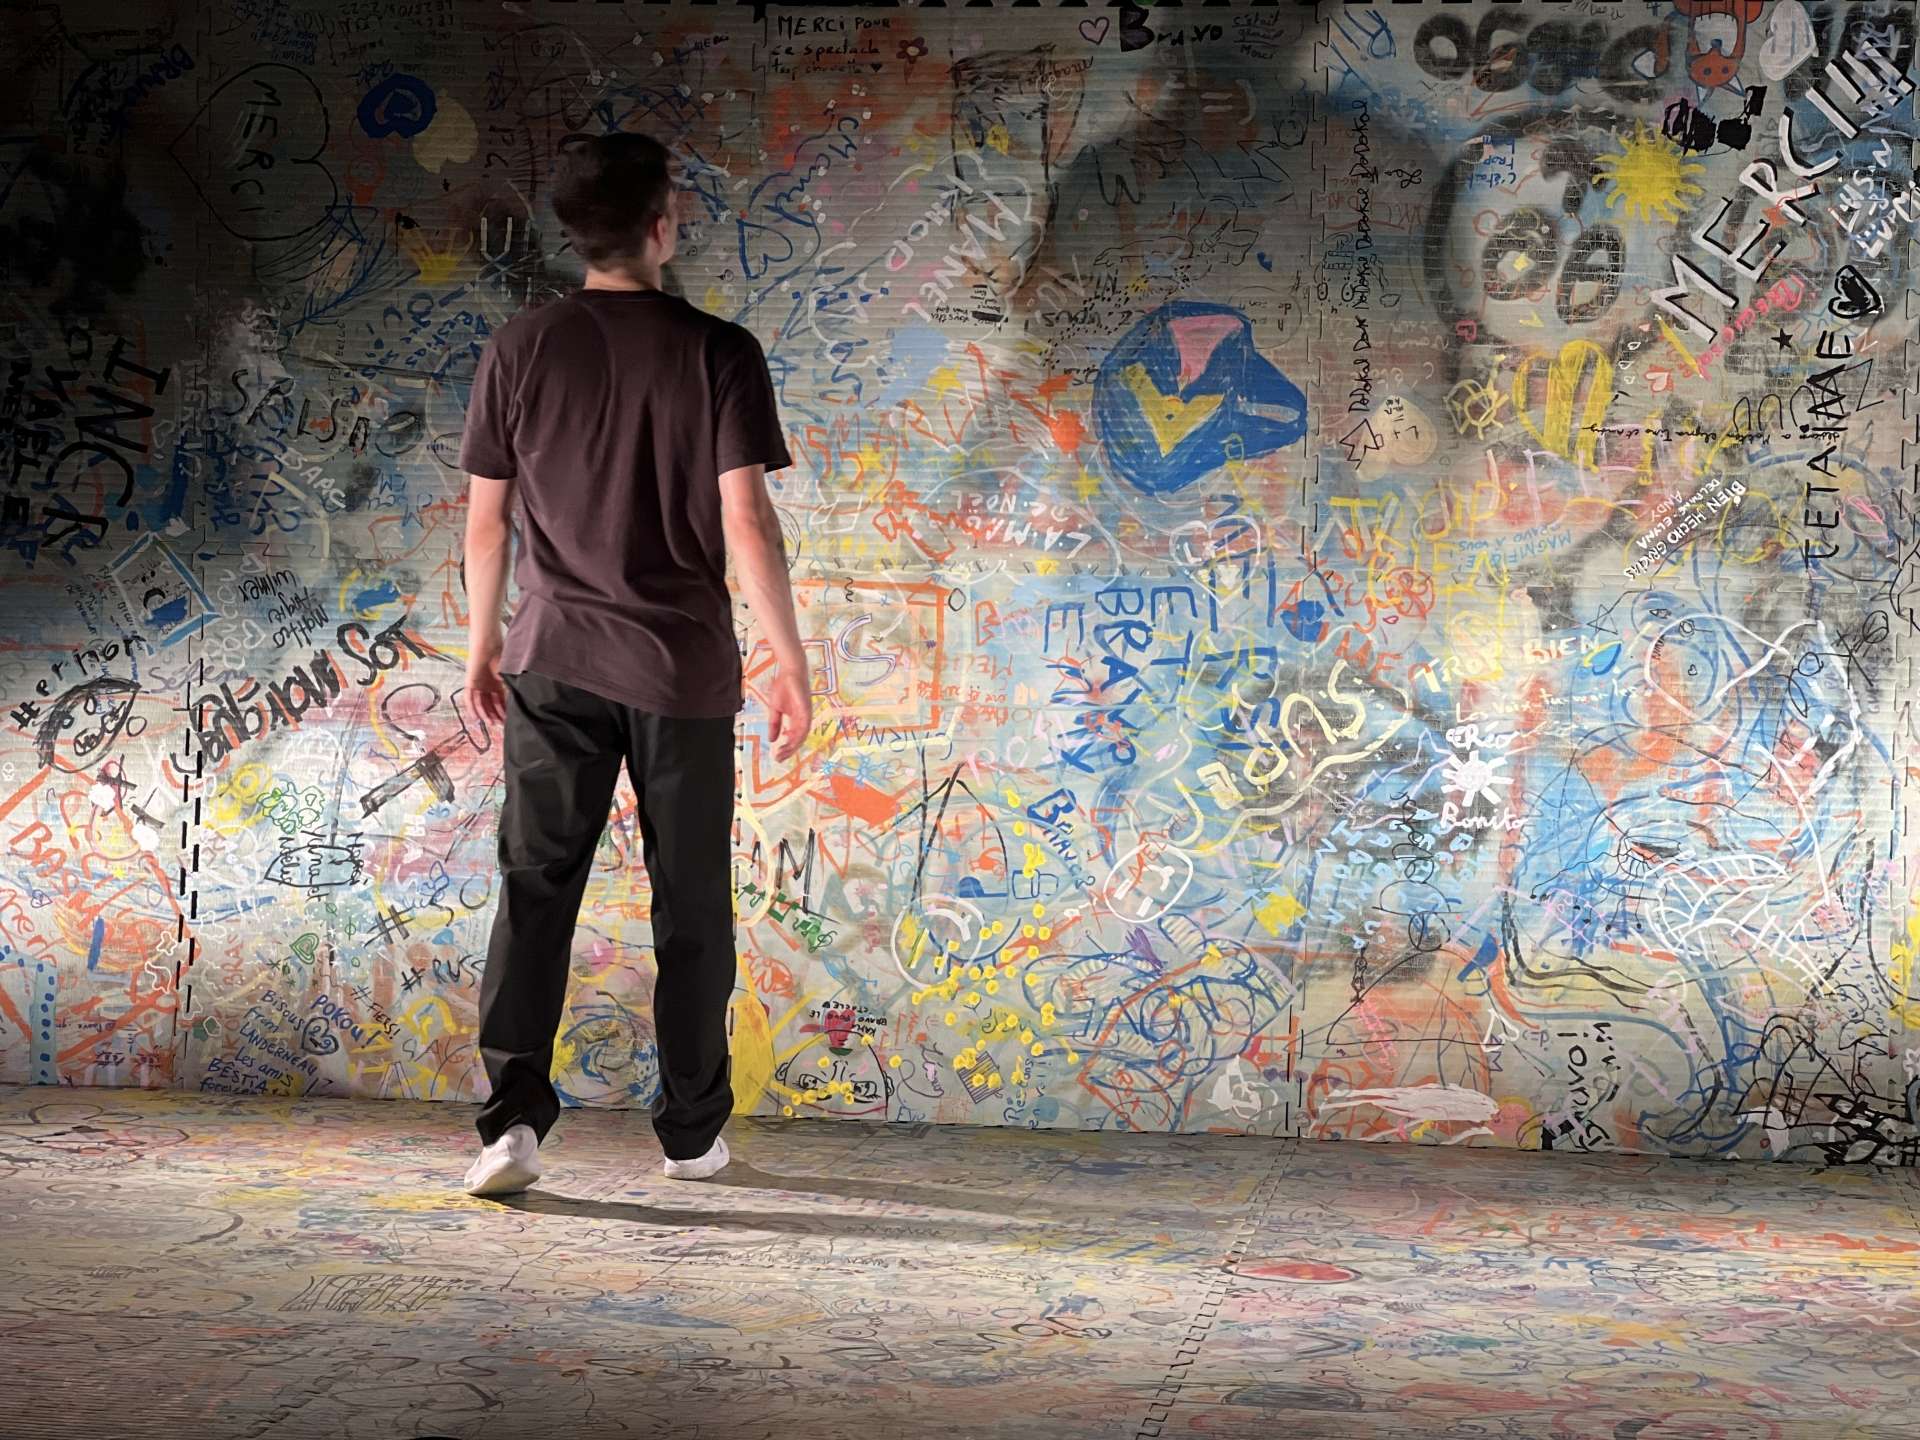 Paul Molina de dos et face à un mur de street art. 